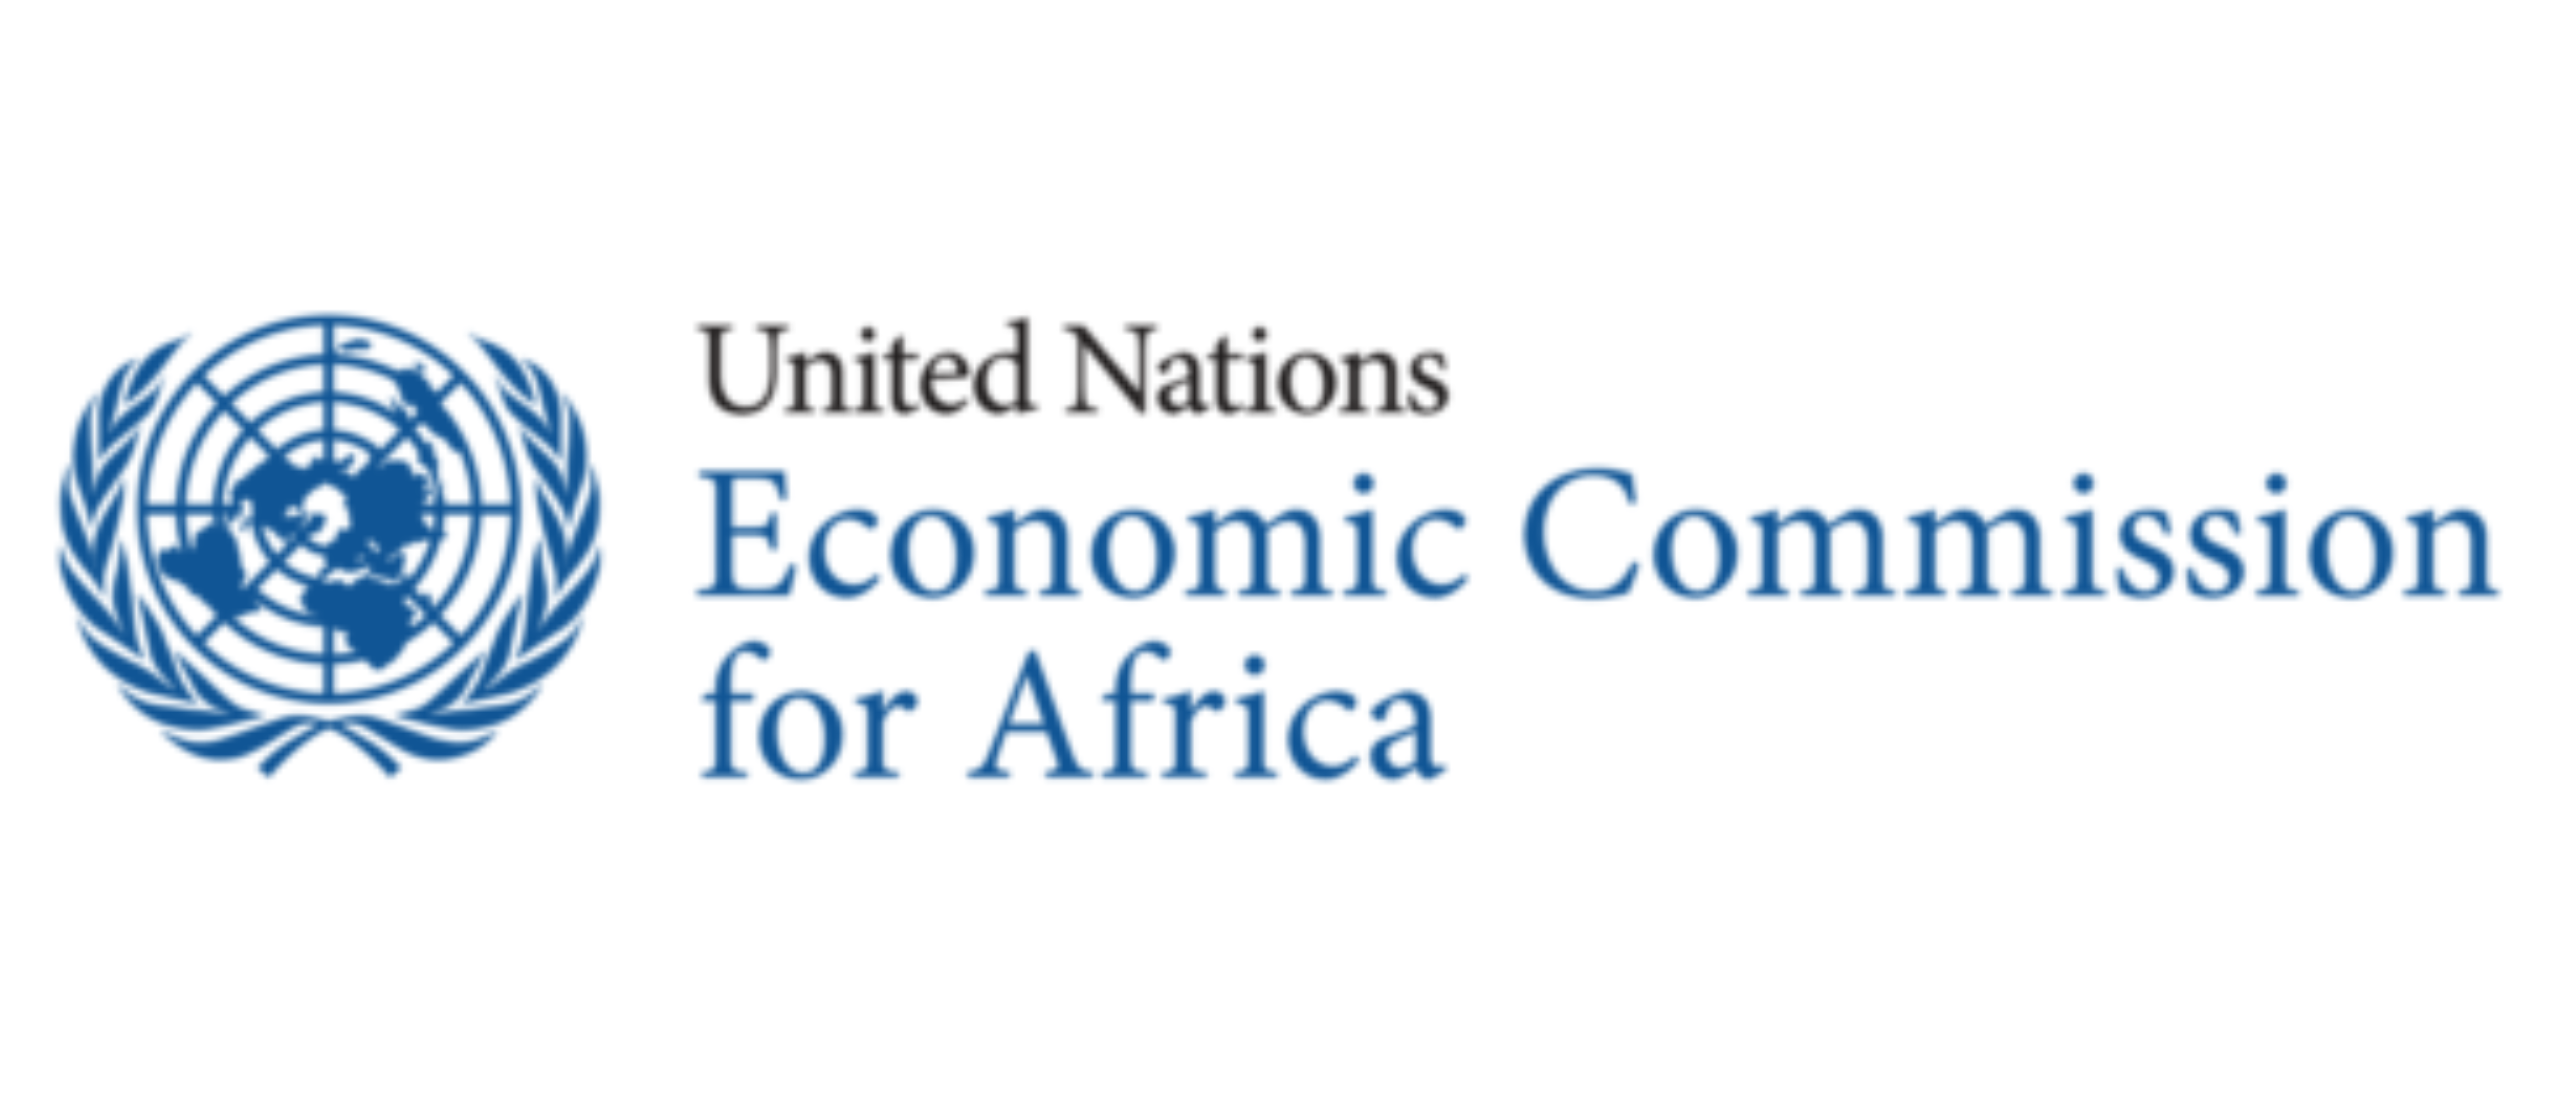 UN Economic Commission for Africa (UNECA)